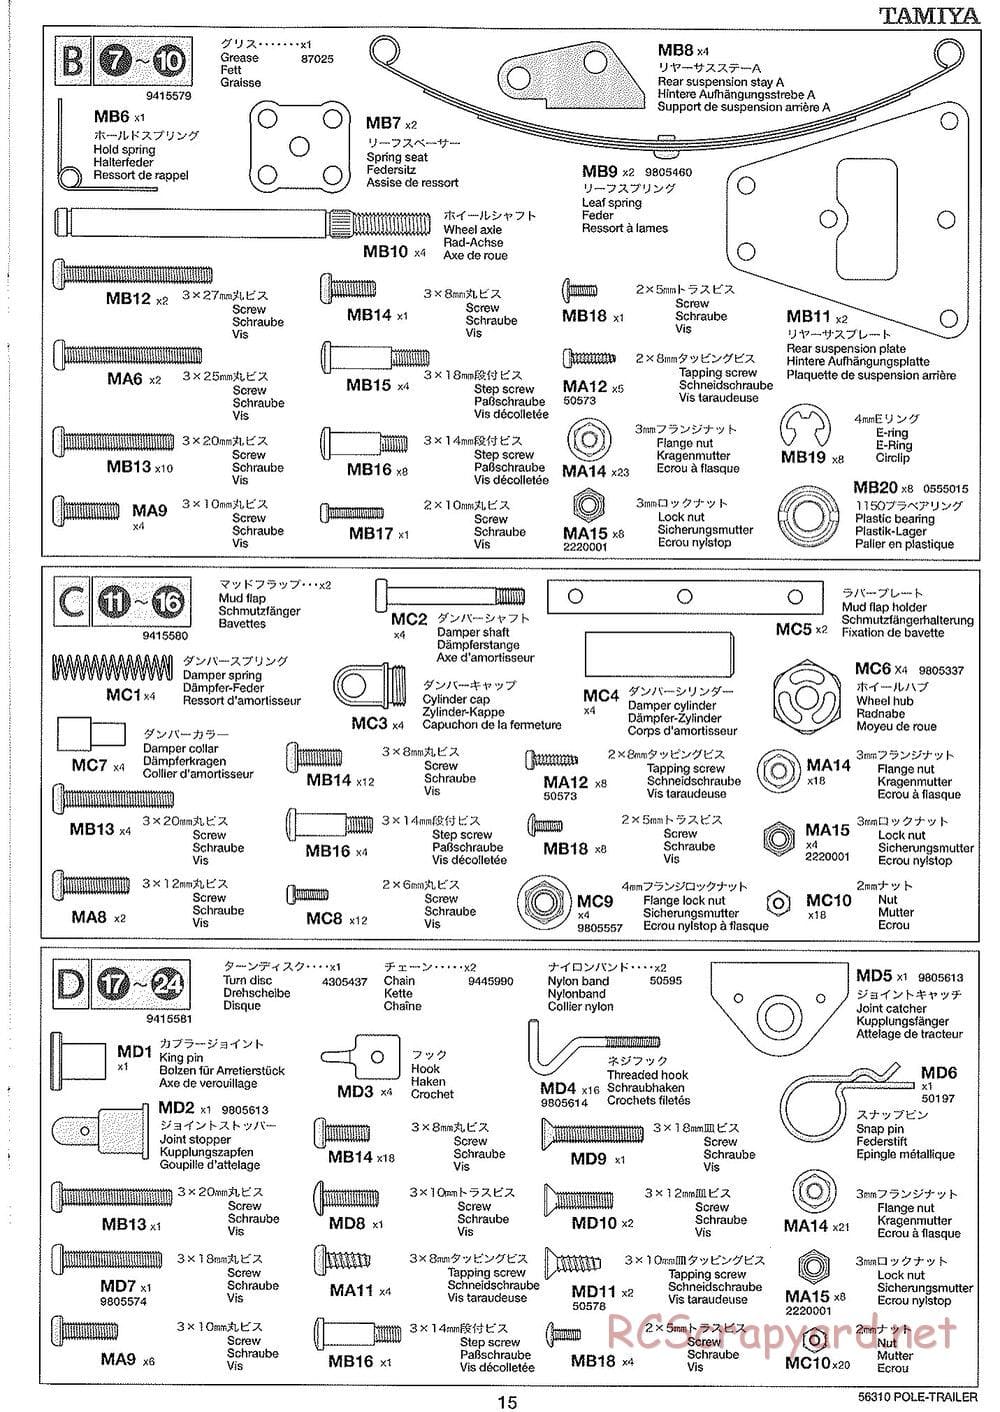 Tamiya - Semi Pole Trailer Chassis - Manual - Page 15